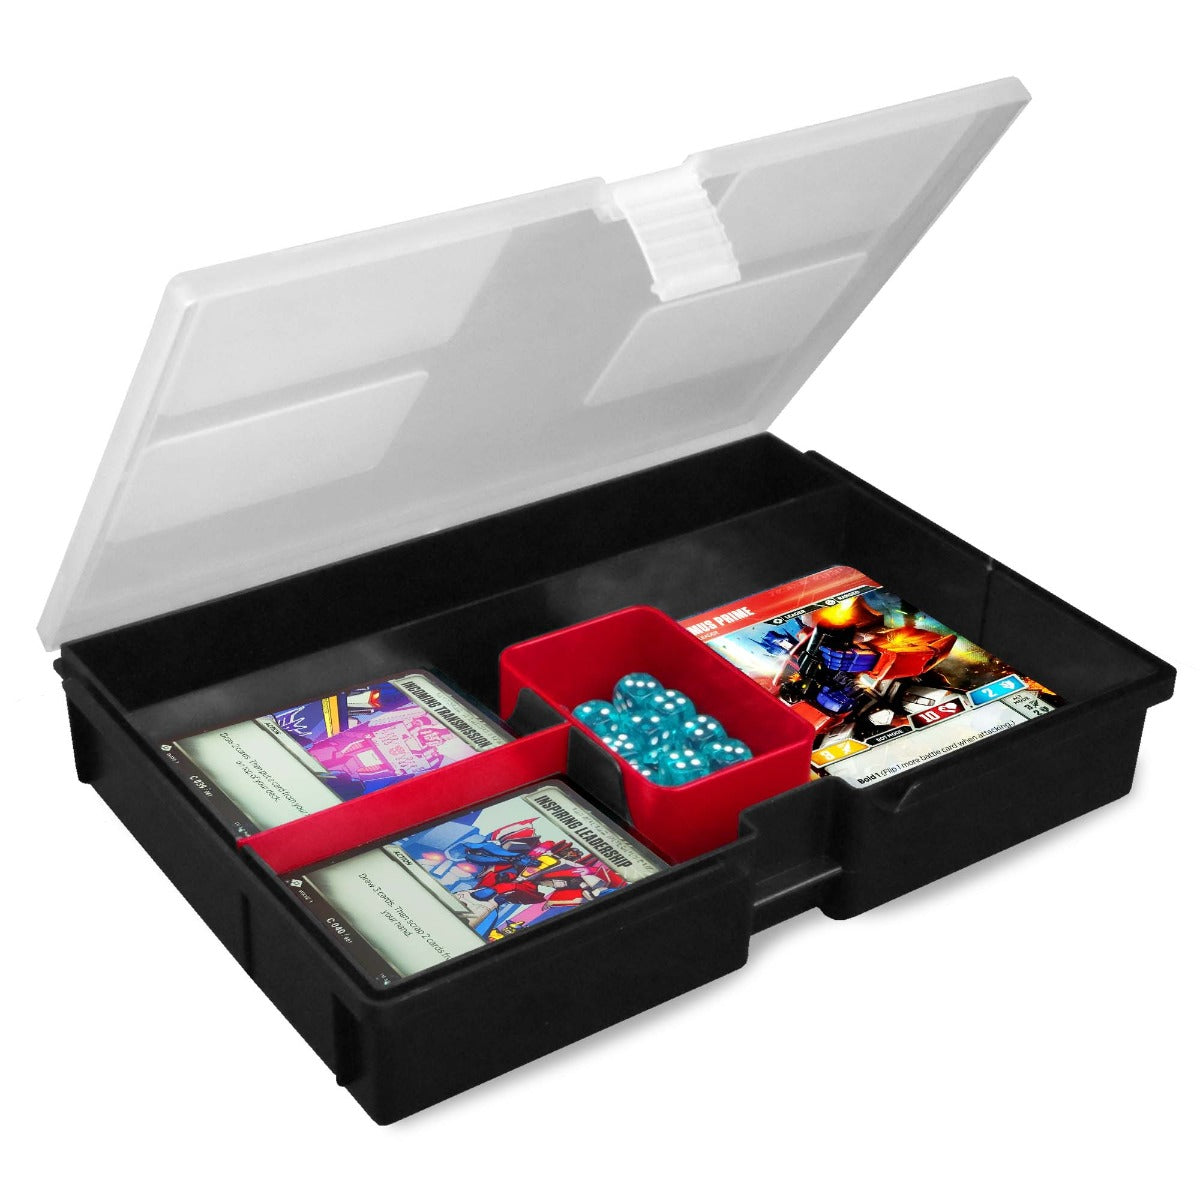 BCW - Prime x4 Configurable Gaming Box